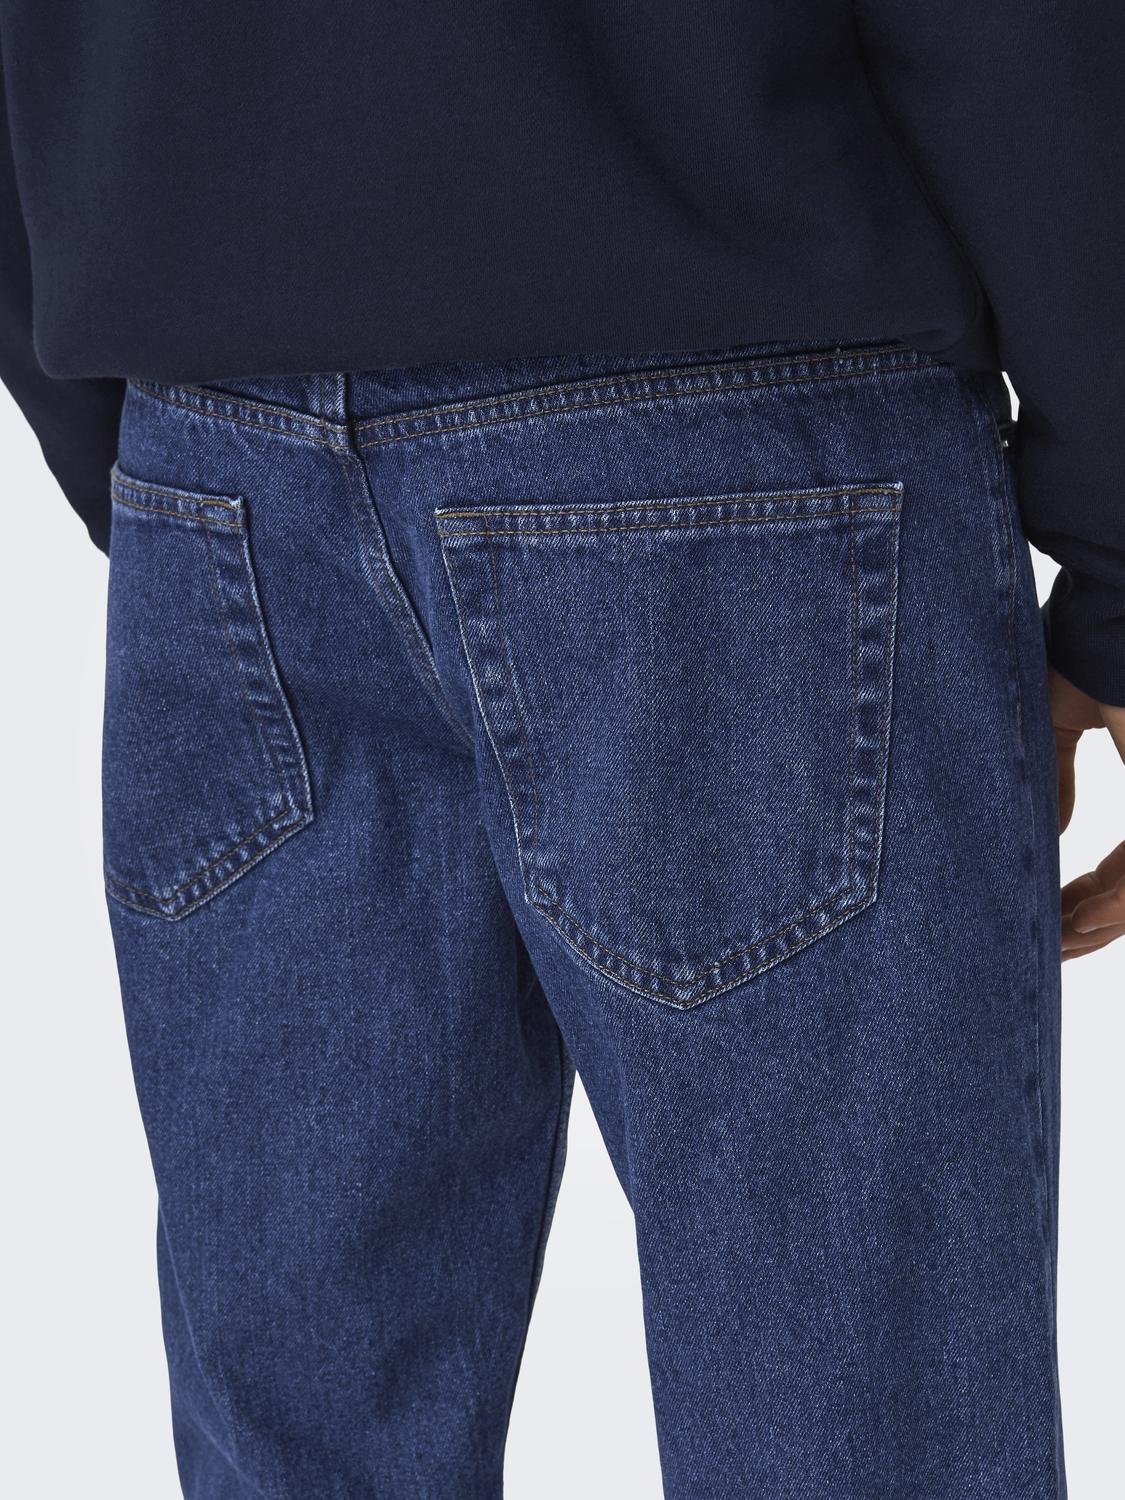 ONLY & SONS ONSEdge Straight Jeans -Medium Blue Denim - 22027901